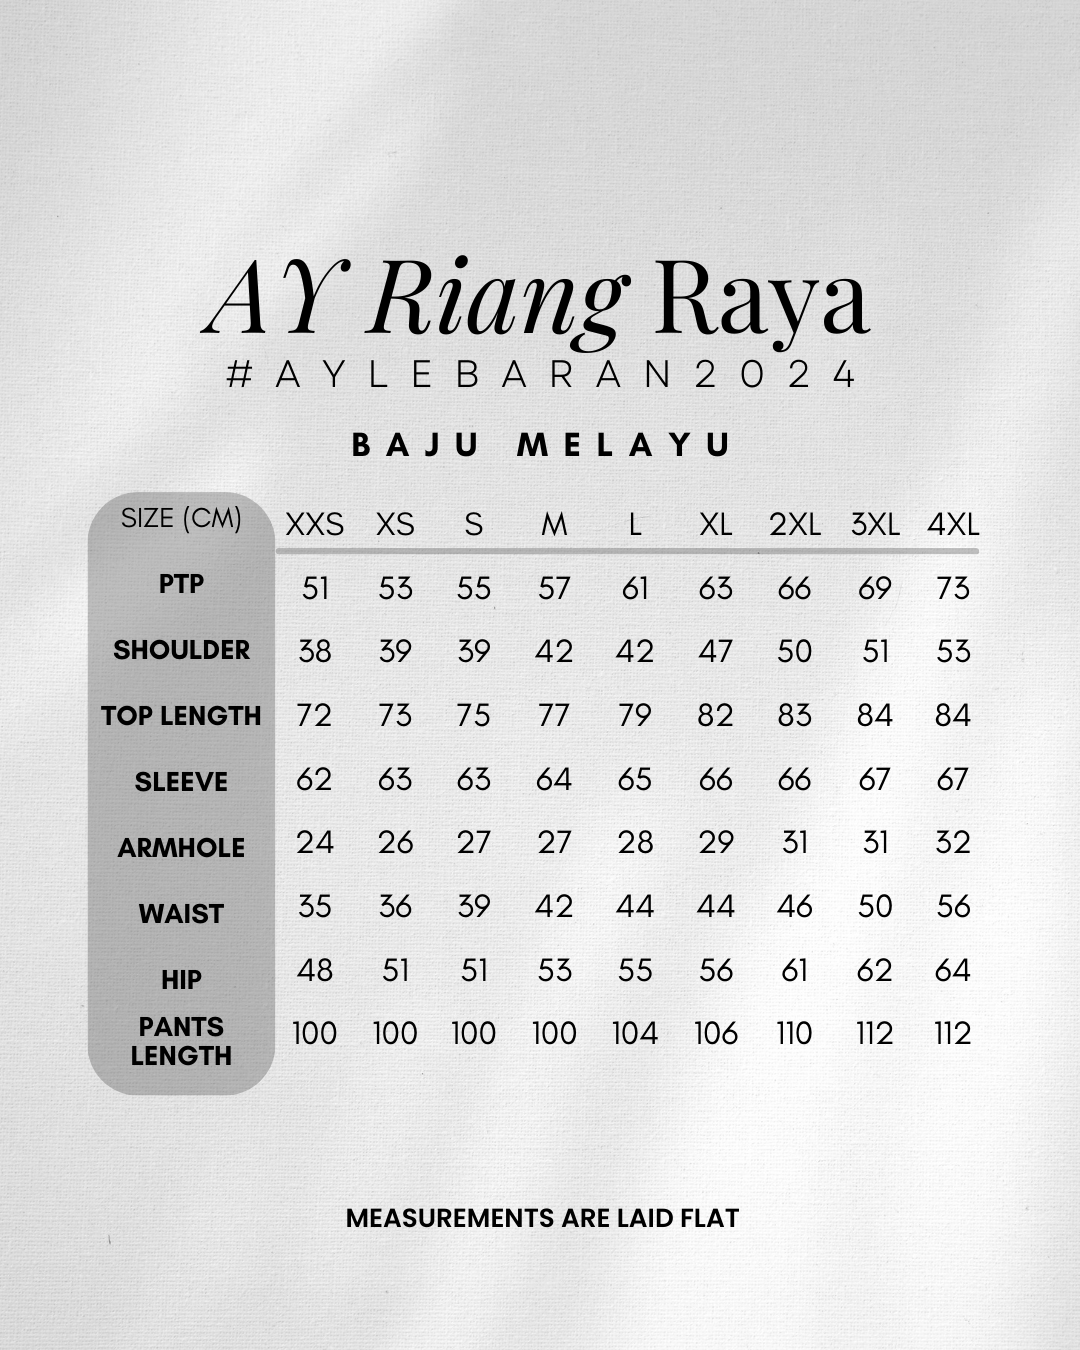 AYLEBARAN 2024 Murni Men's Baju Melayu